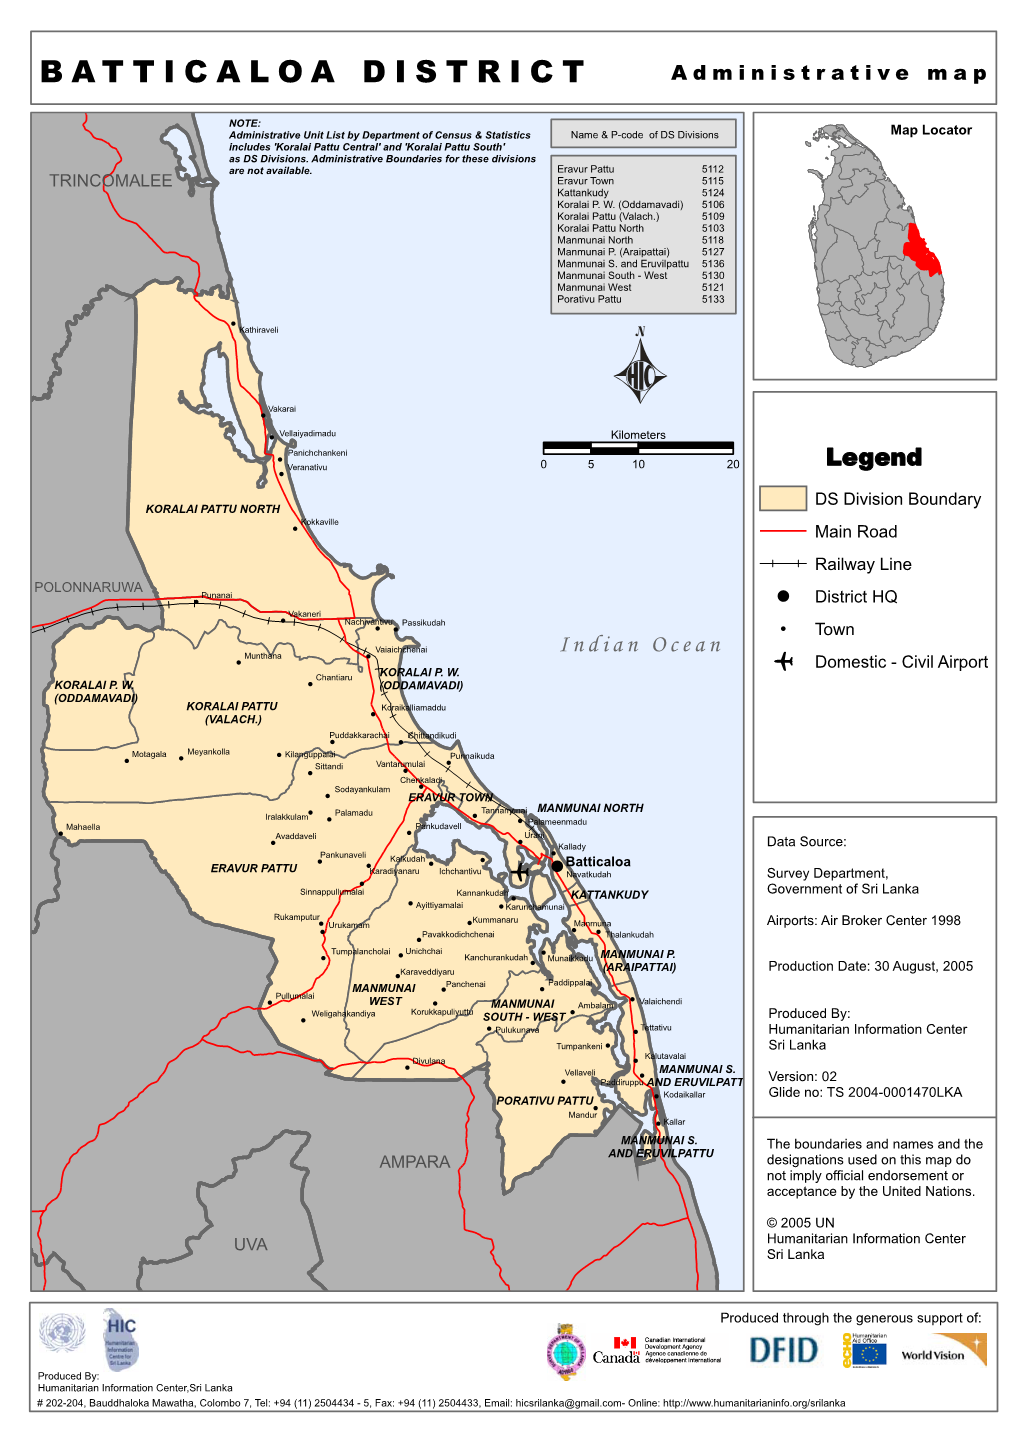 BATTICALOA DISTRICT Administrative Map